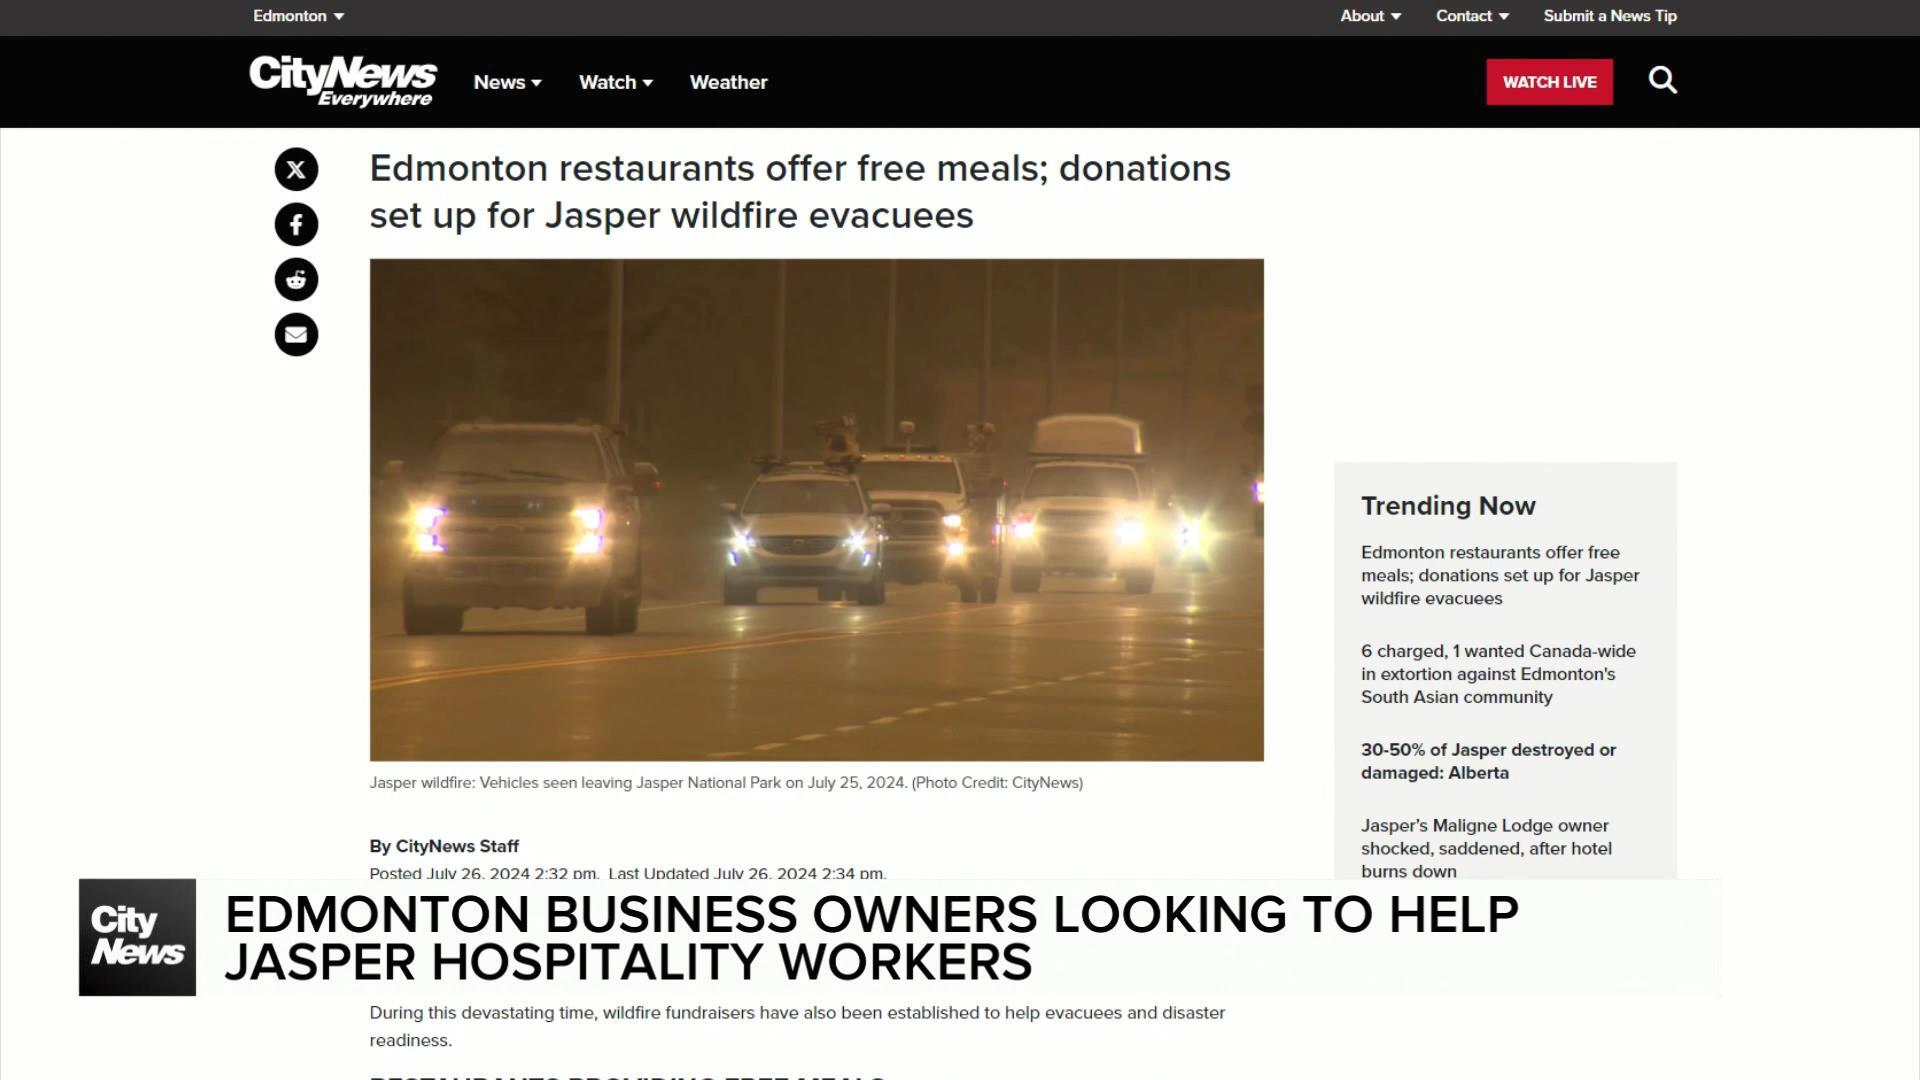 Edmonton business owners looking to help Jasper hospitality workers